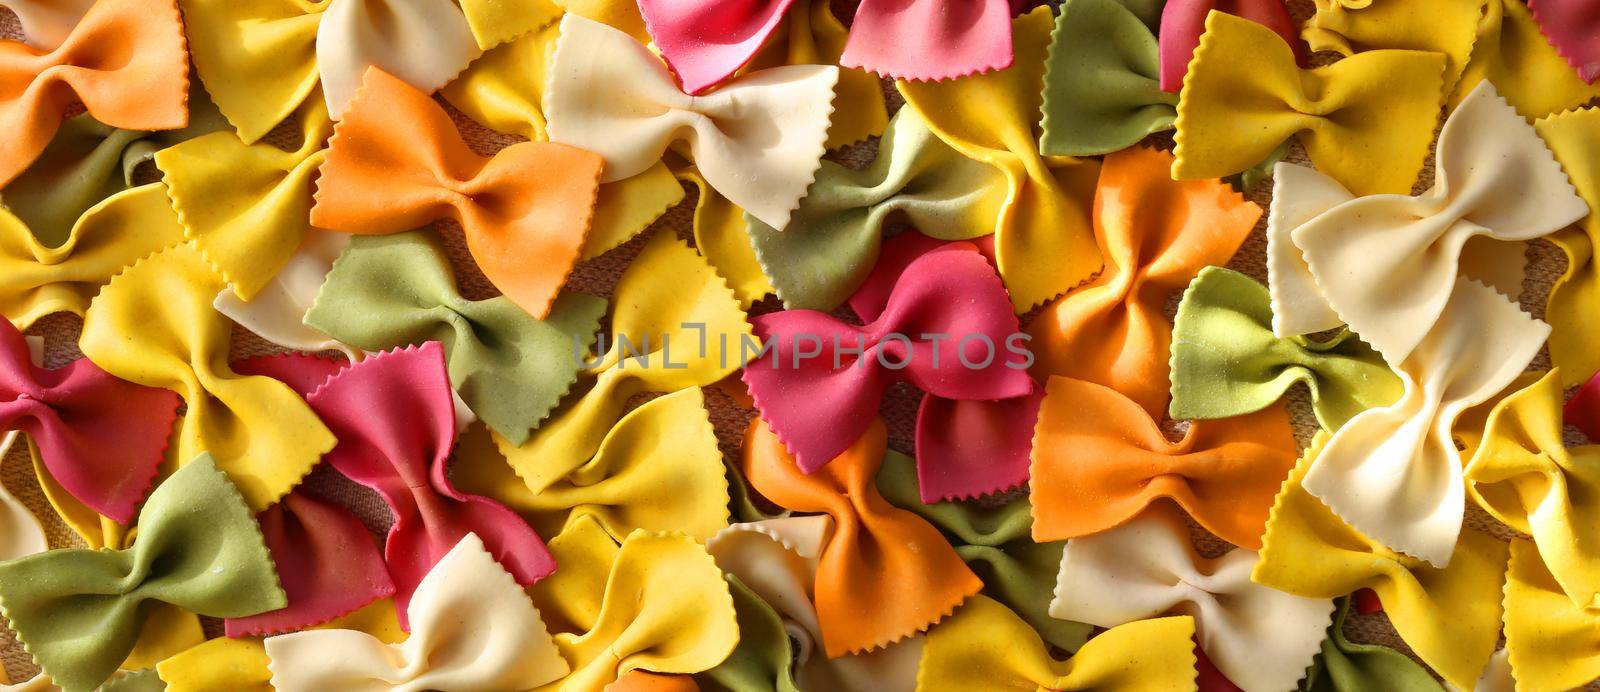 Italian pasta farfalle. Colourful green pasta background. Pasta recipes concept. Horizontal flat lay